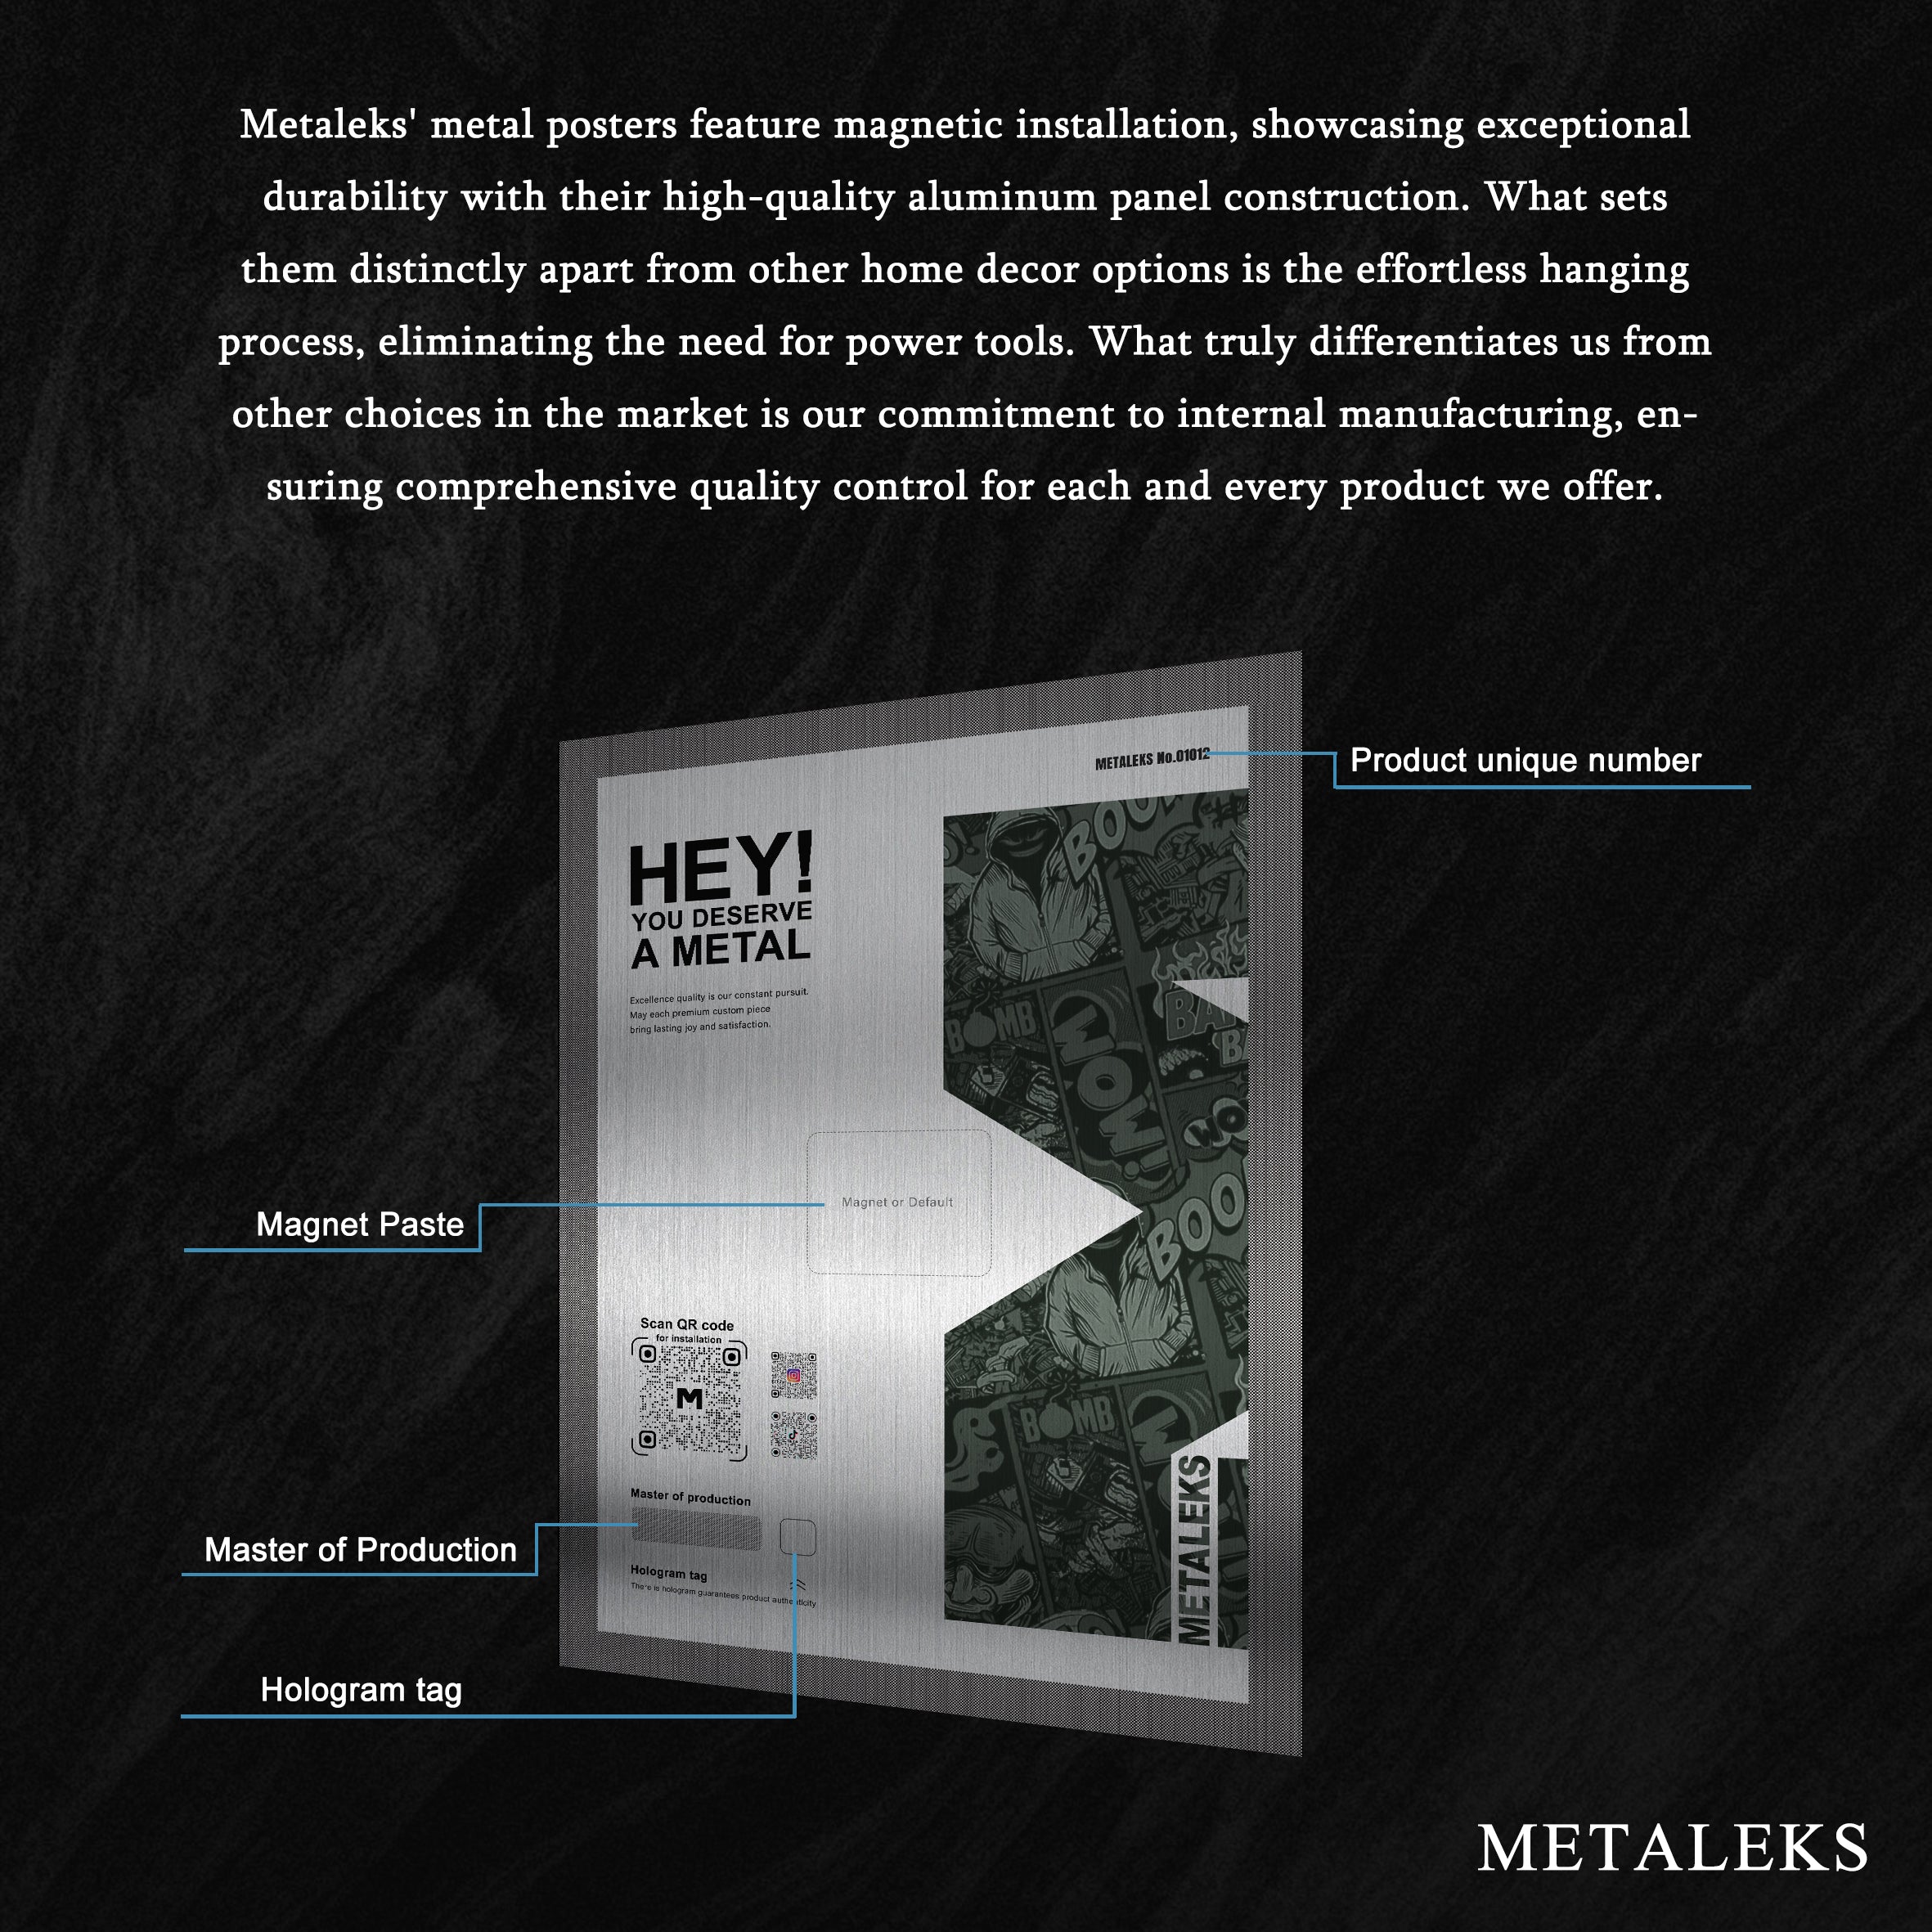 HellDive-designed by @rizal.az